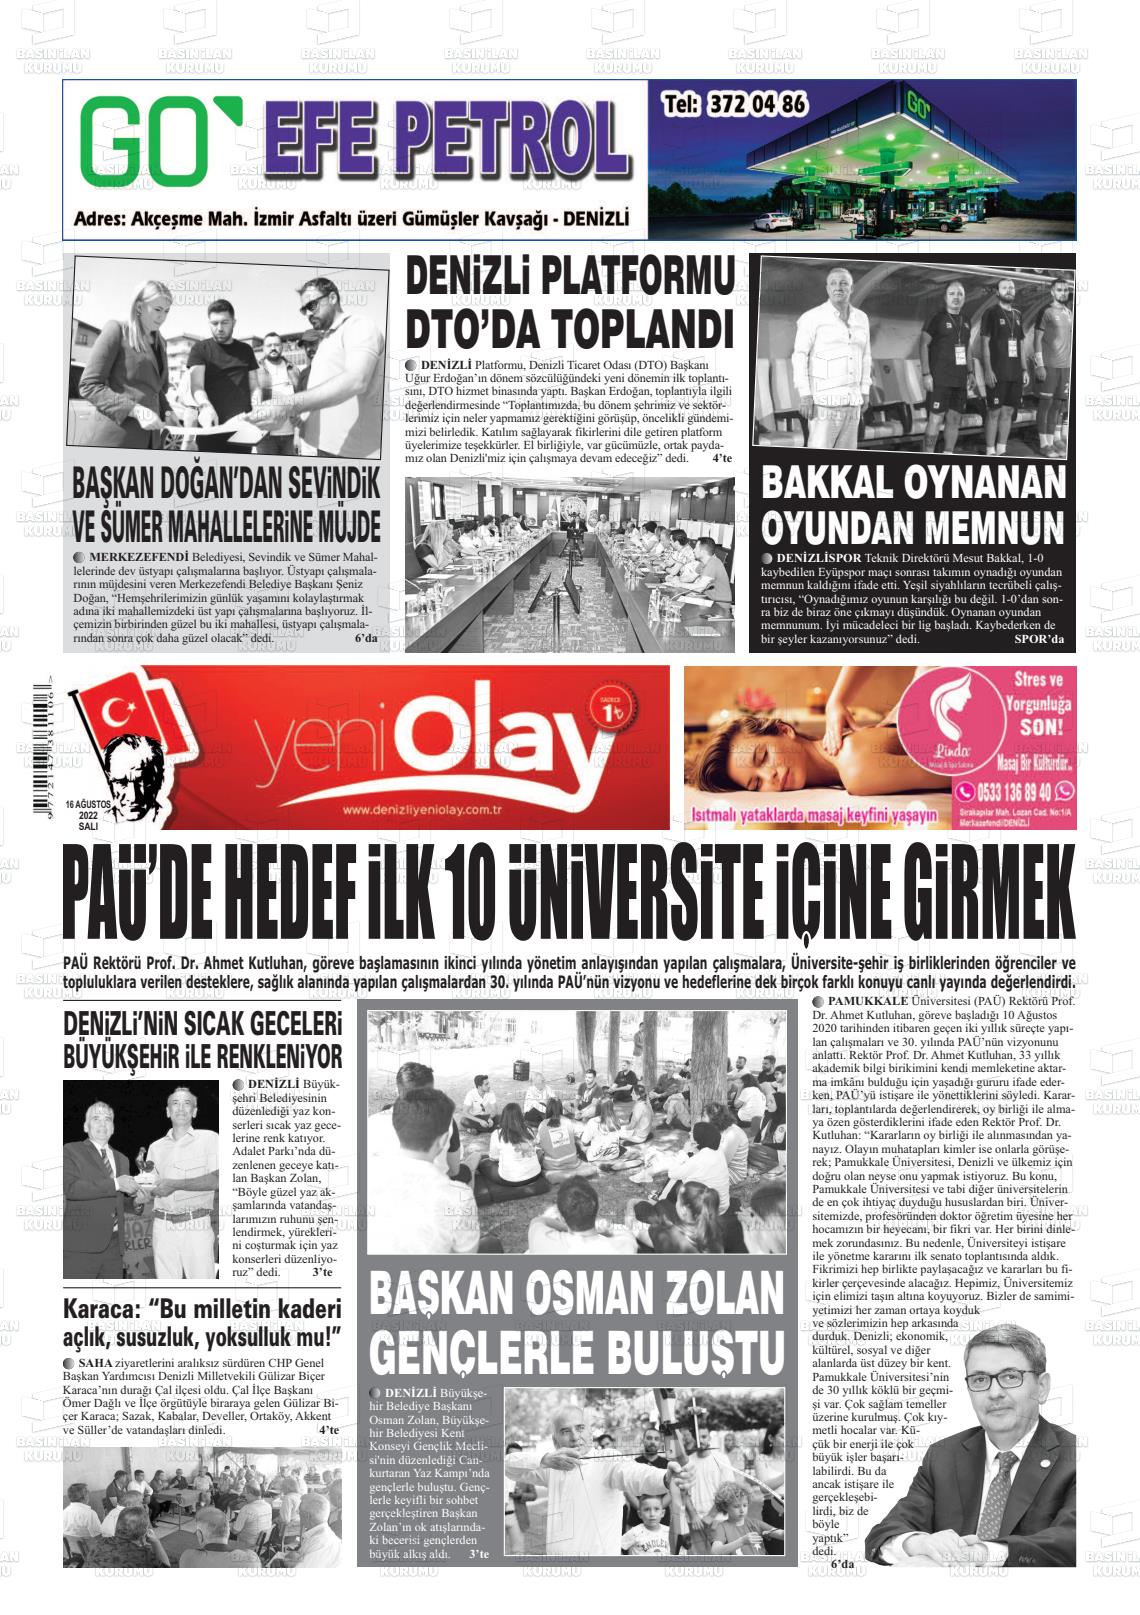 16 Ağustos 2022 Denizli Yeni Olay Gazete Manşeti